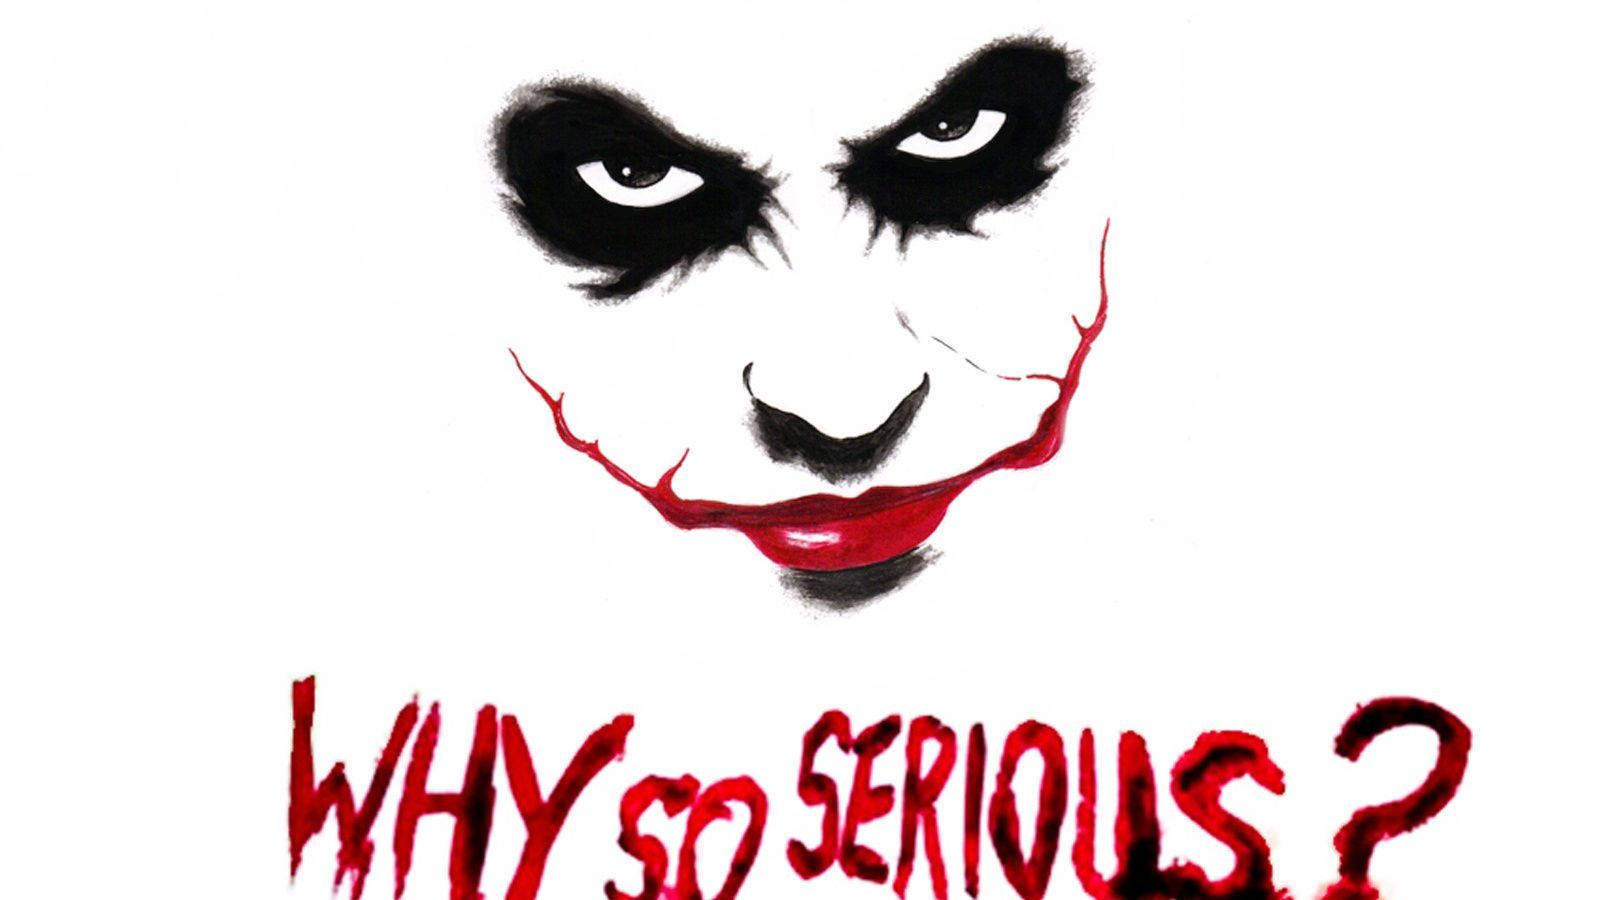 Free Why So Serious Joker Wallpaper Downloads, [100+] Why So Serious Joker  Wallpapers for FREE 